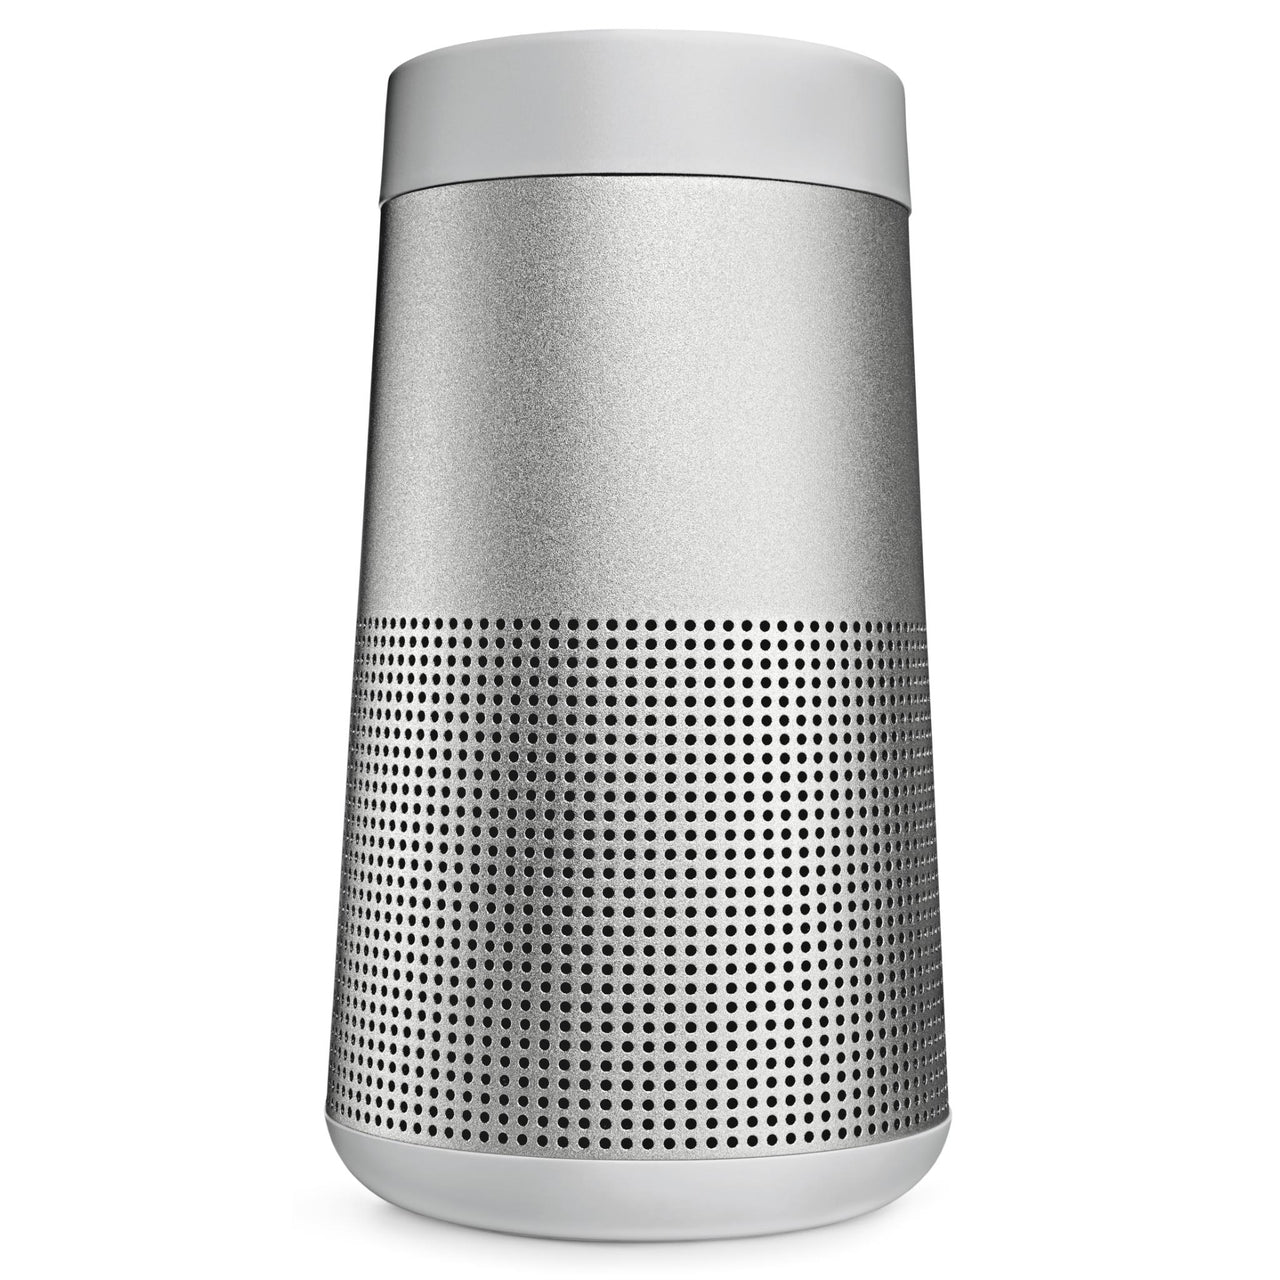 Bose Soundlink Revolve II Portable Bluetooth Speaker - Luxe Silver Bose